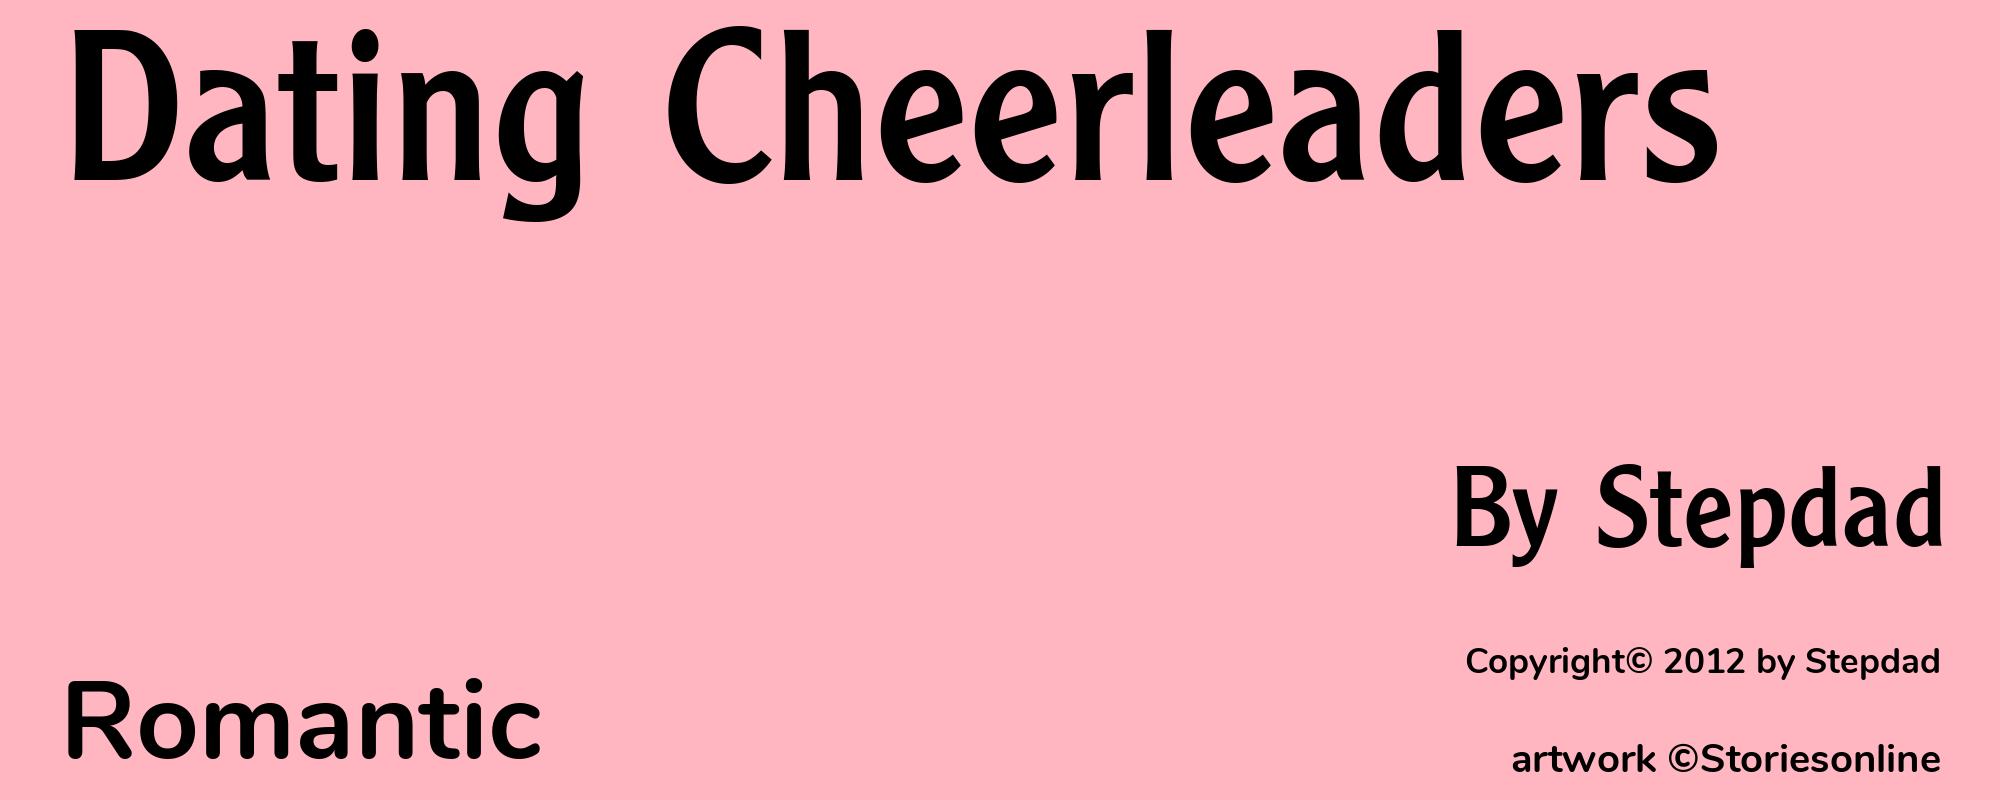 Dating Cheerleaders - Cover